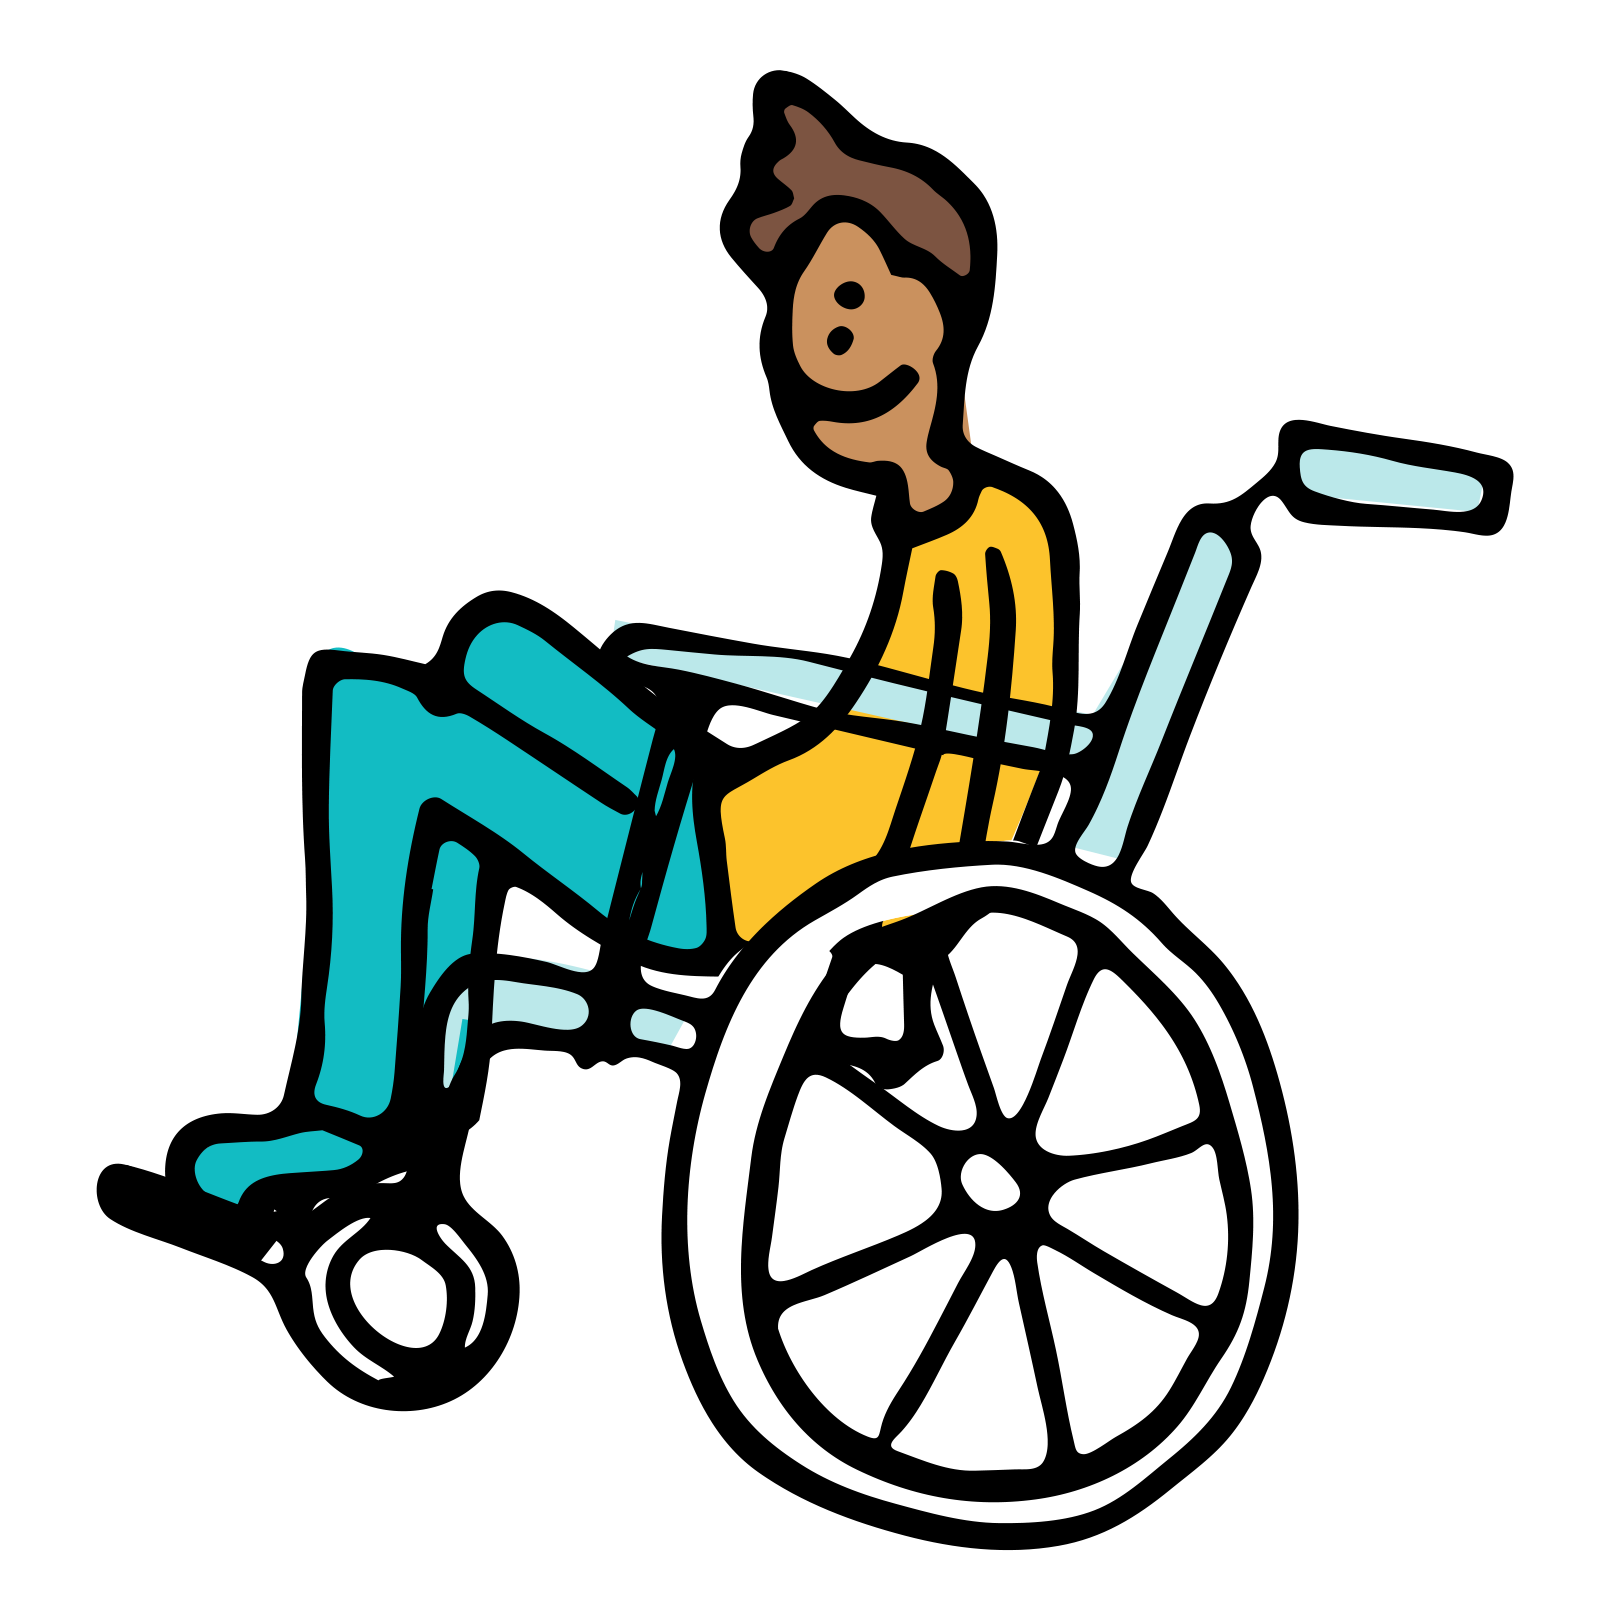 Wheelchair illustration